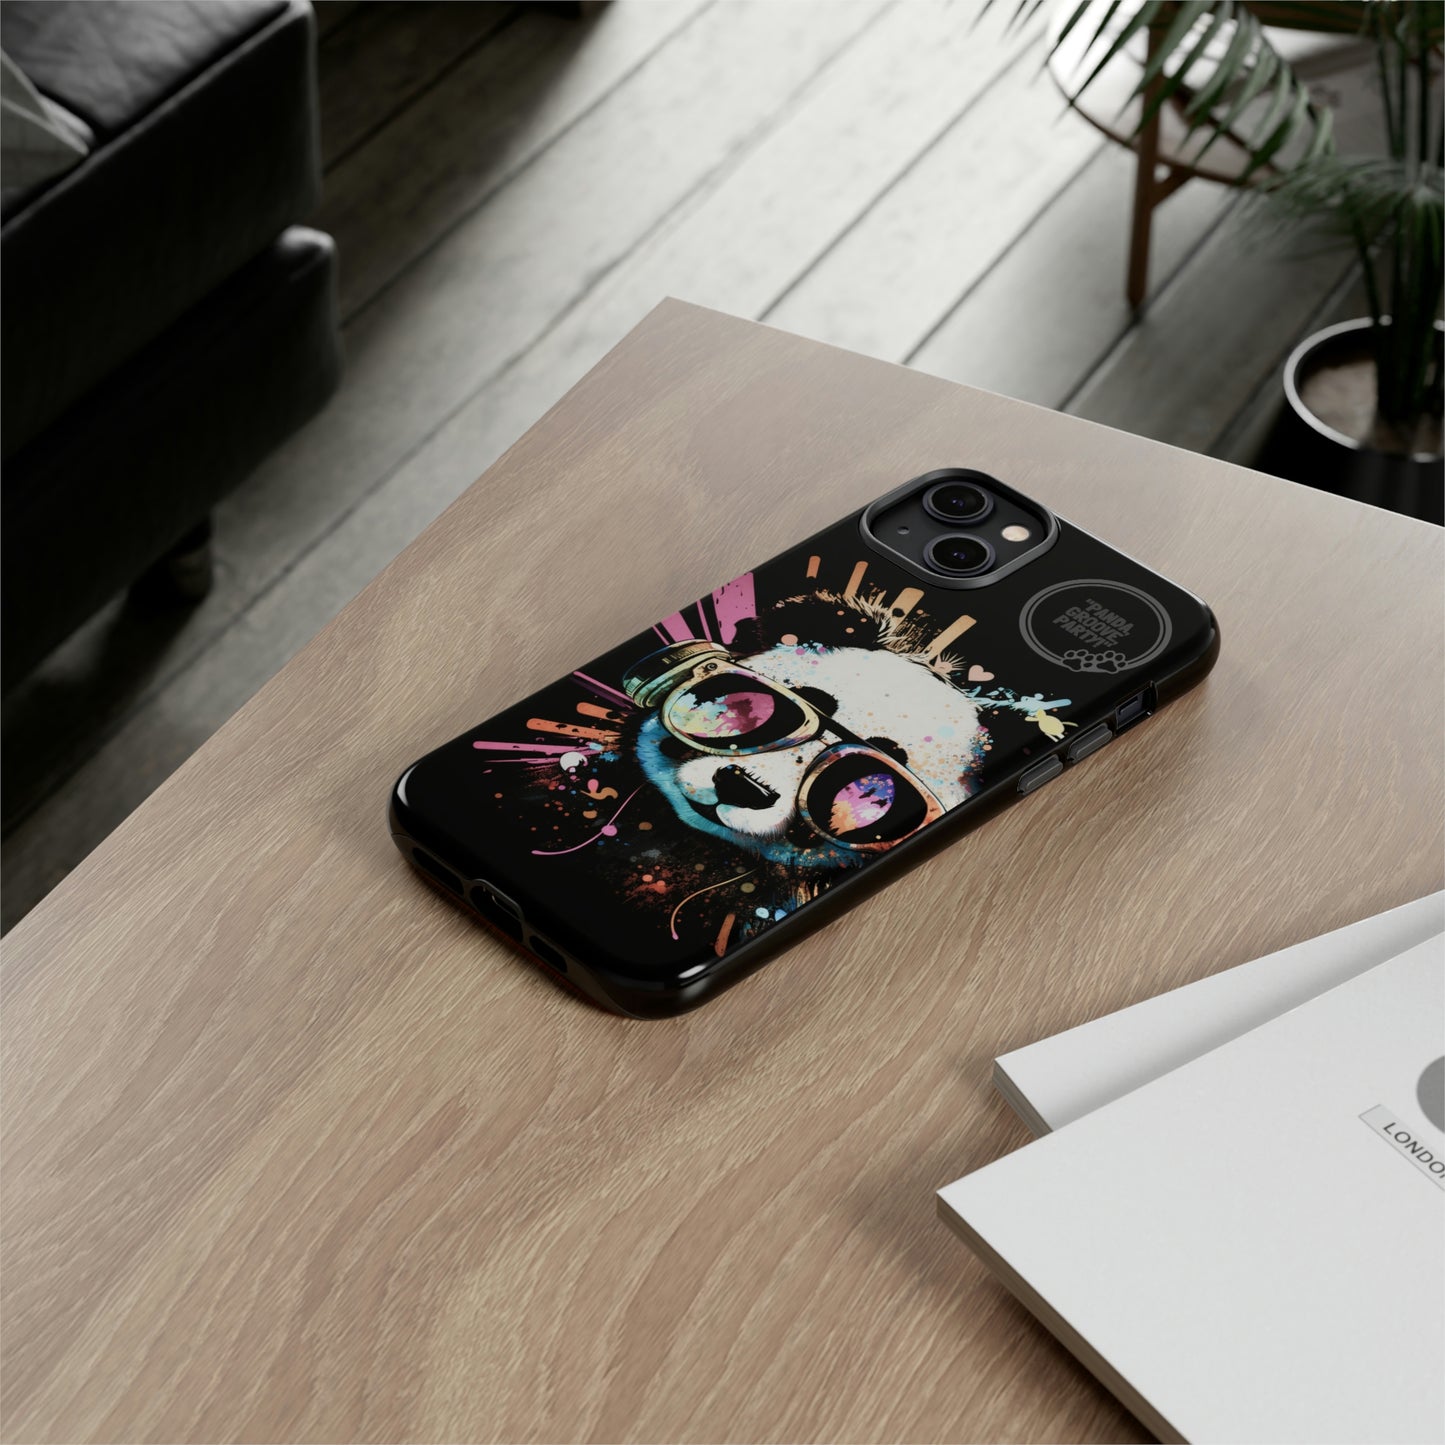 Tough Cases "Panda, Groove, Party!" A beautifully printed Panda Design